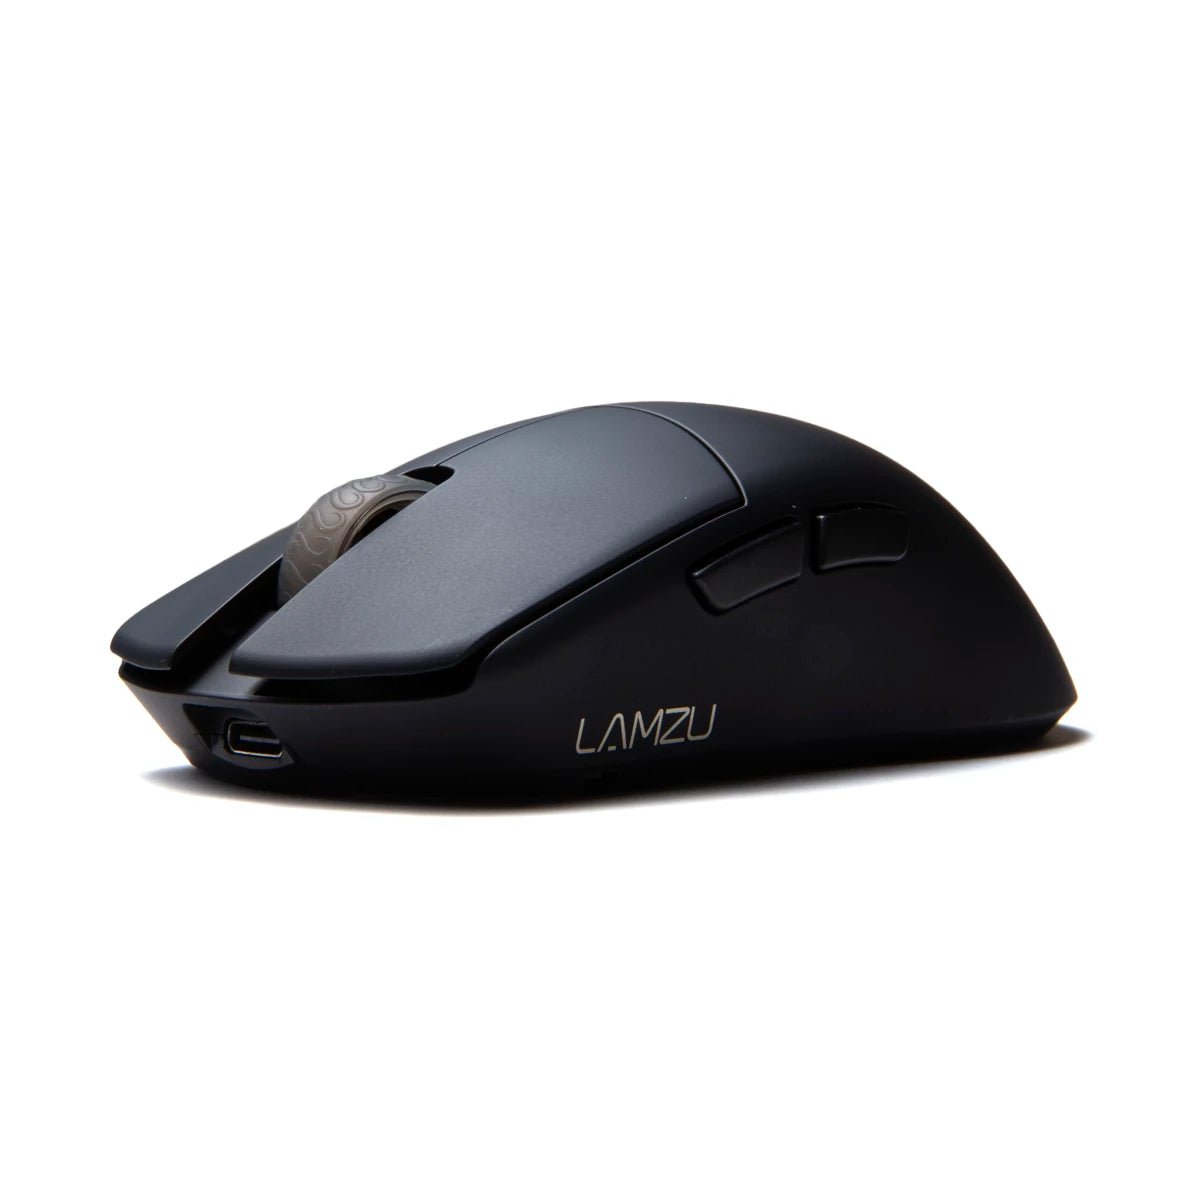 Lamzu Maya Superlight Gaming Mouse